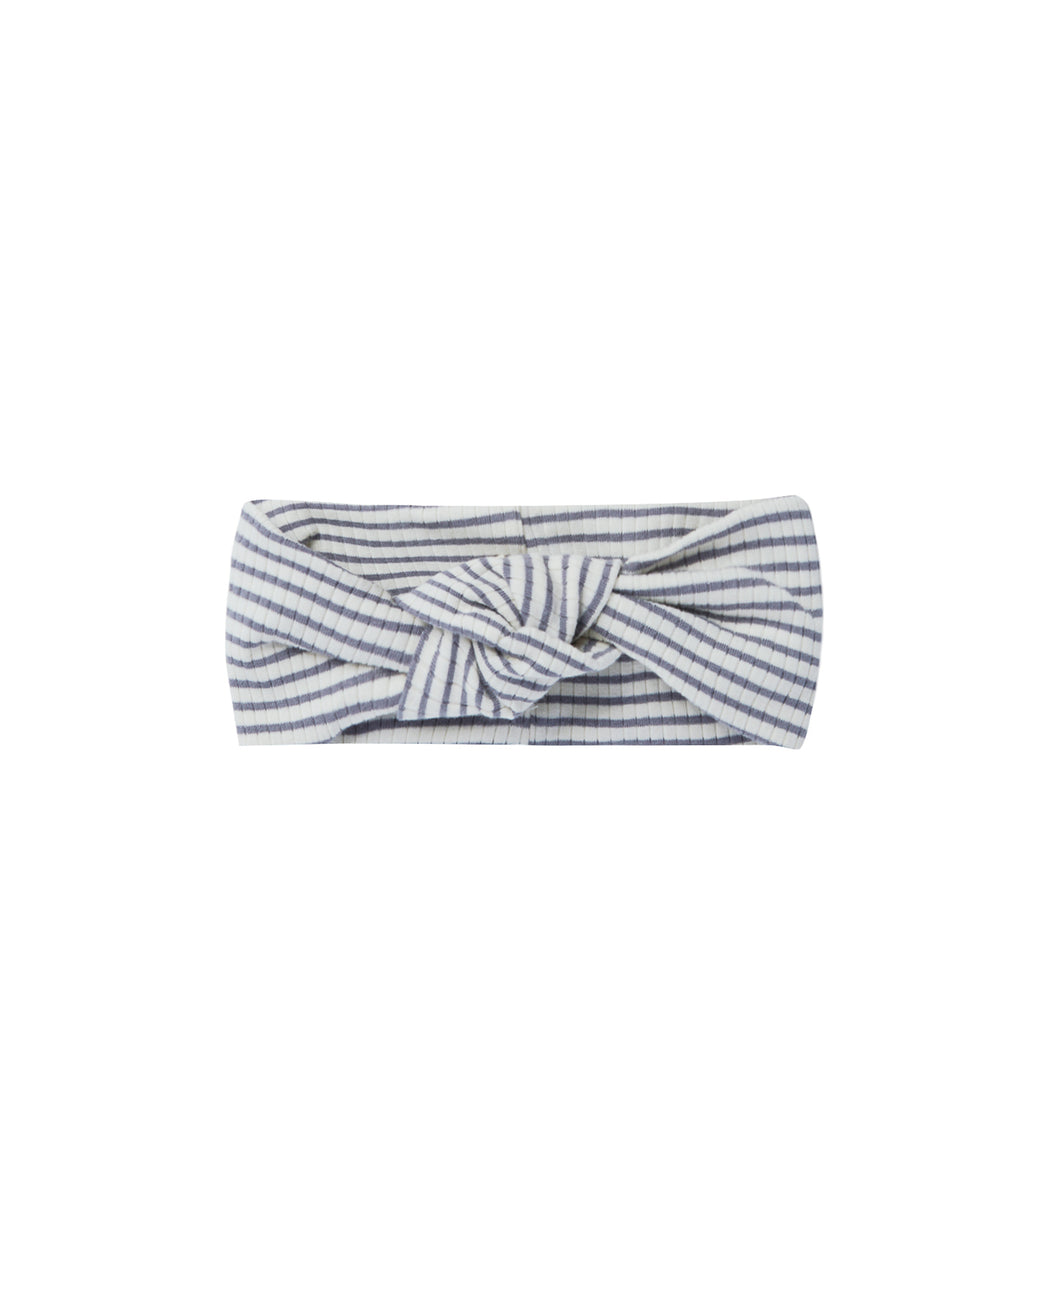 Knotted Headband – Indigo Stripe